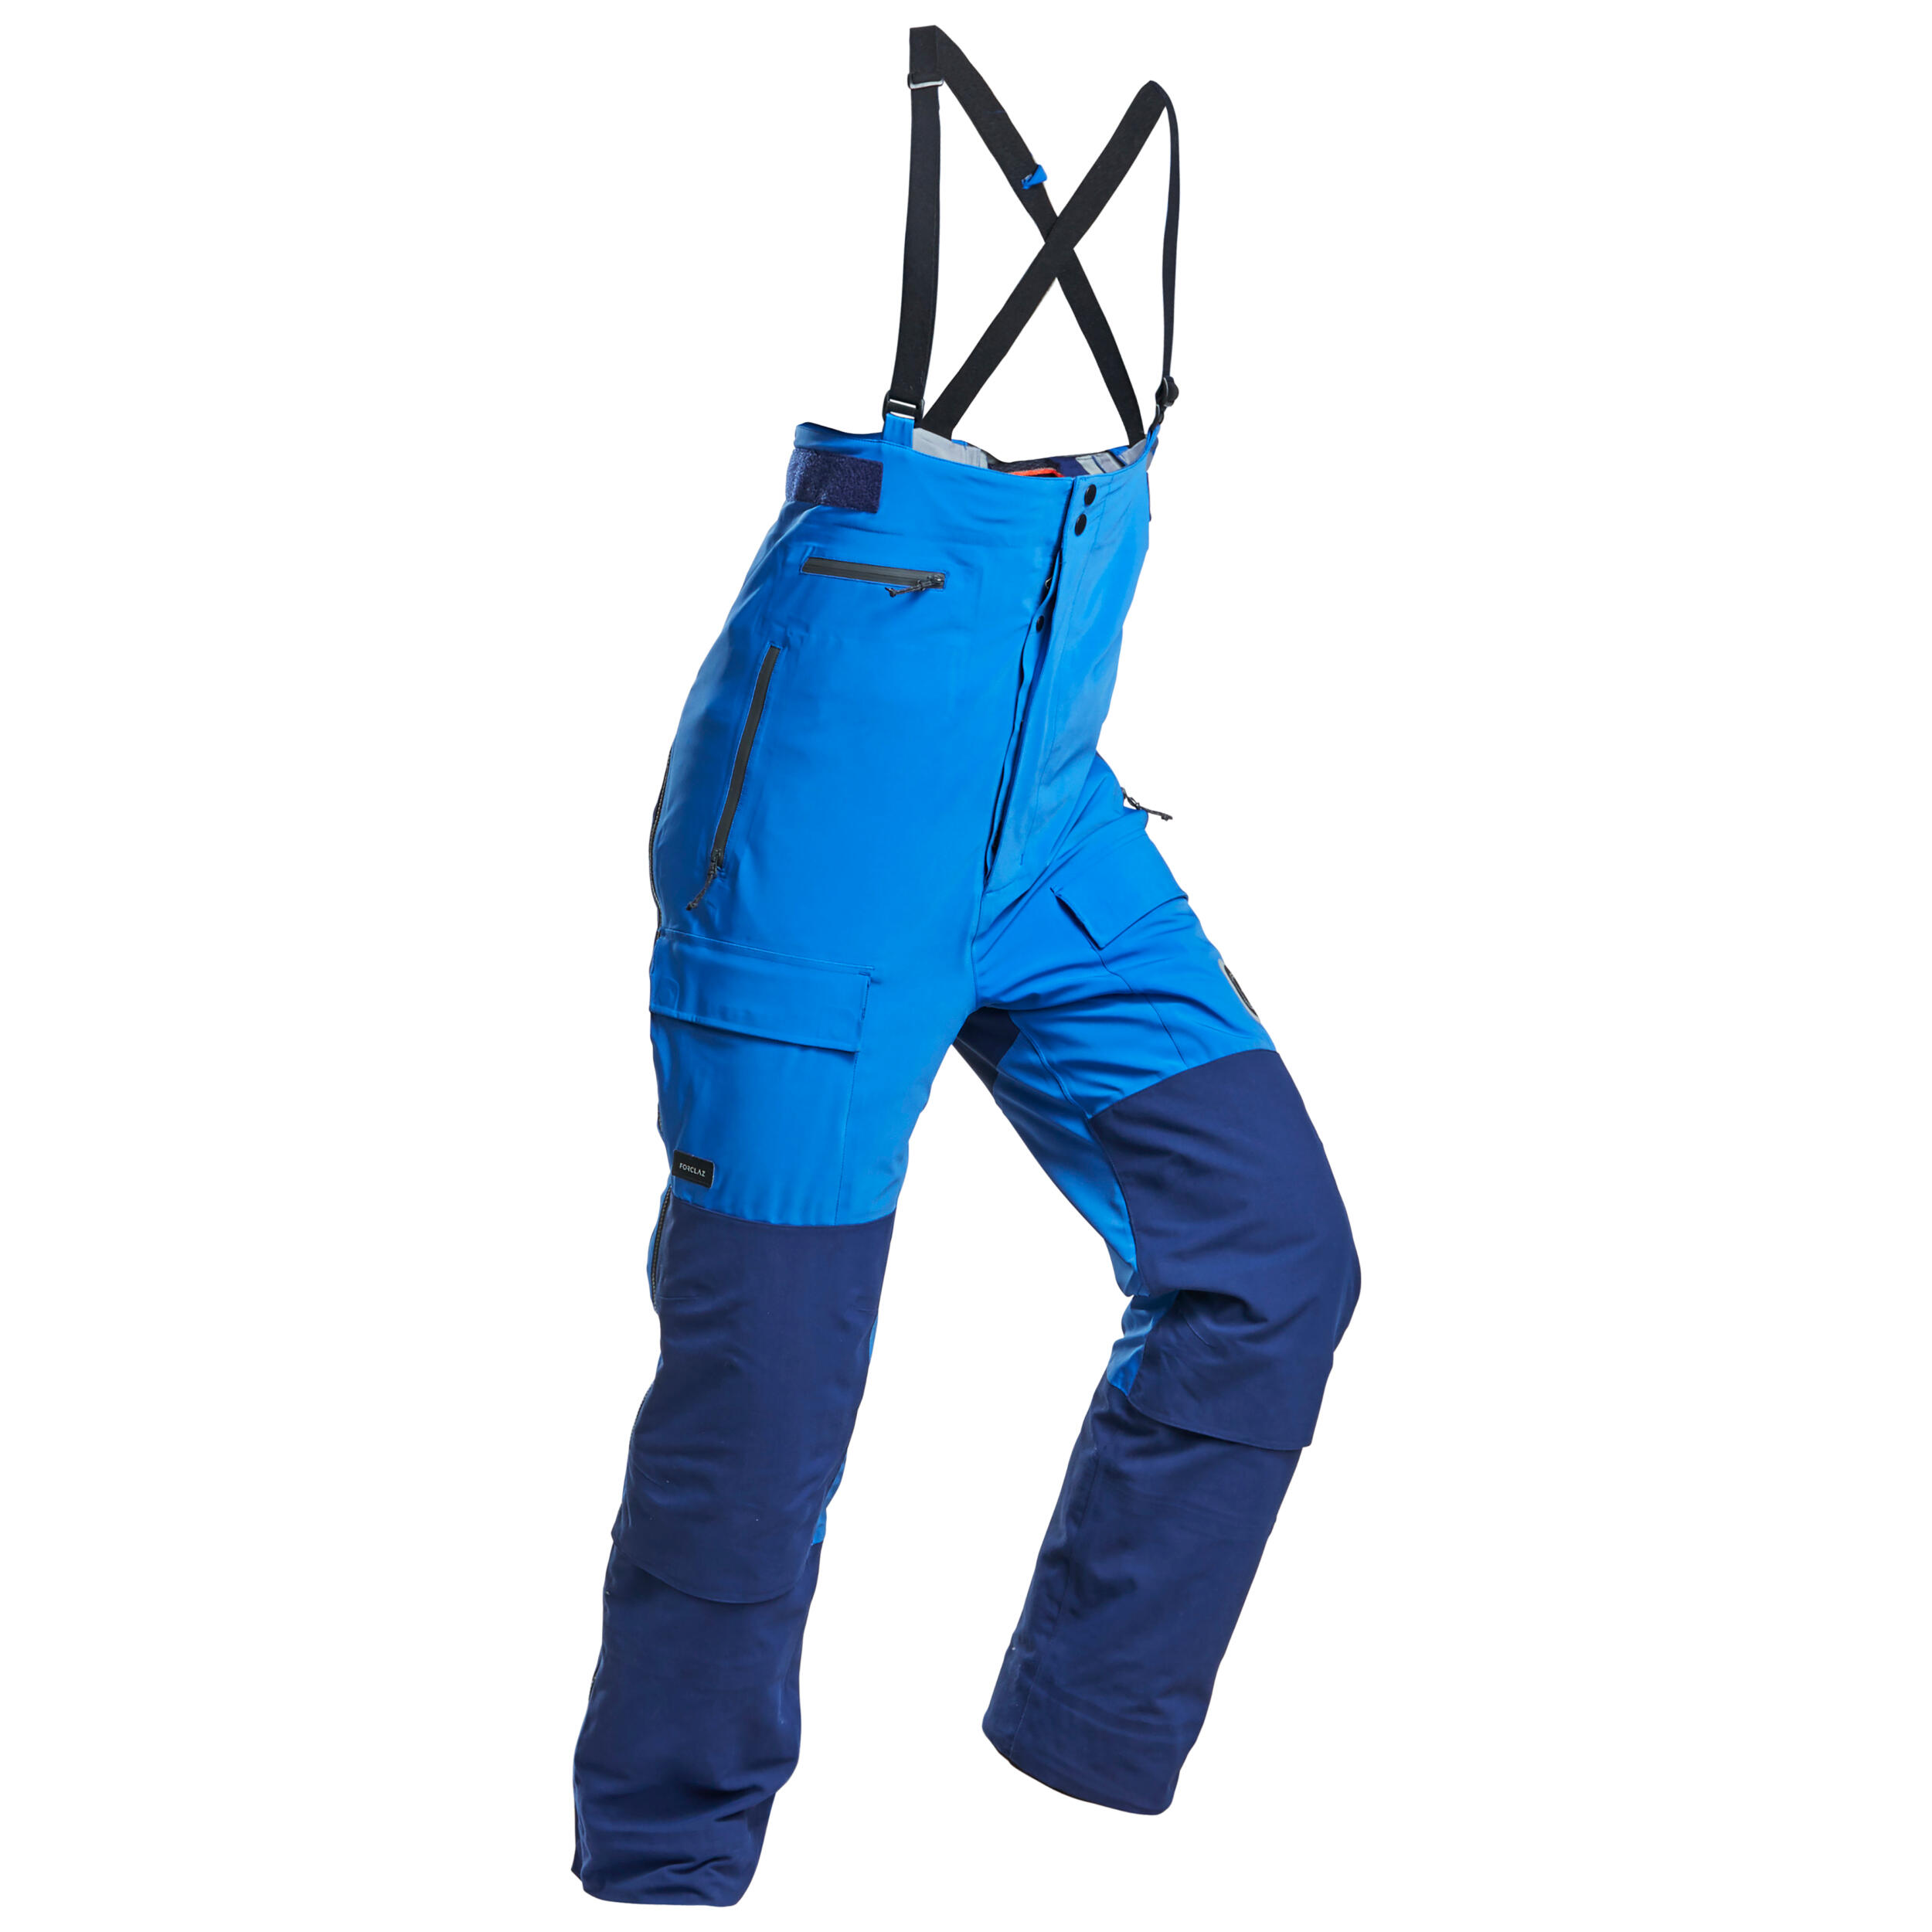 Decathlon official soft shell pants men's outdoor winter and spring rock  climbing warm windproof pants waterproof